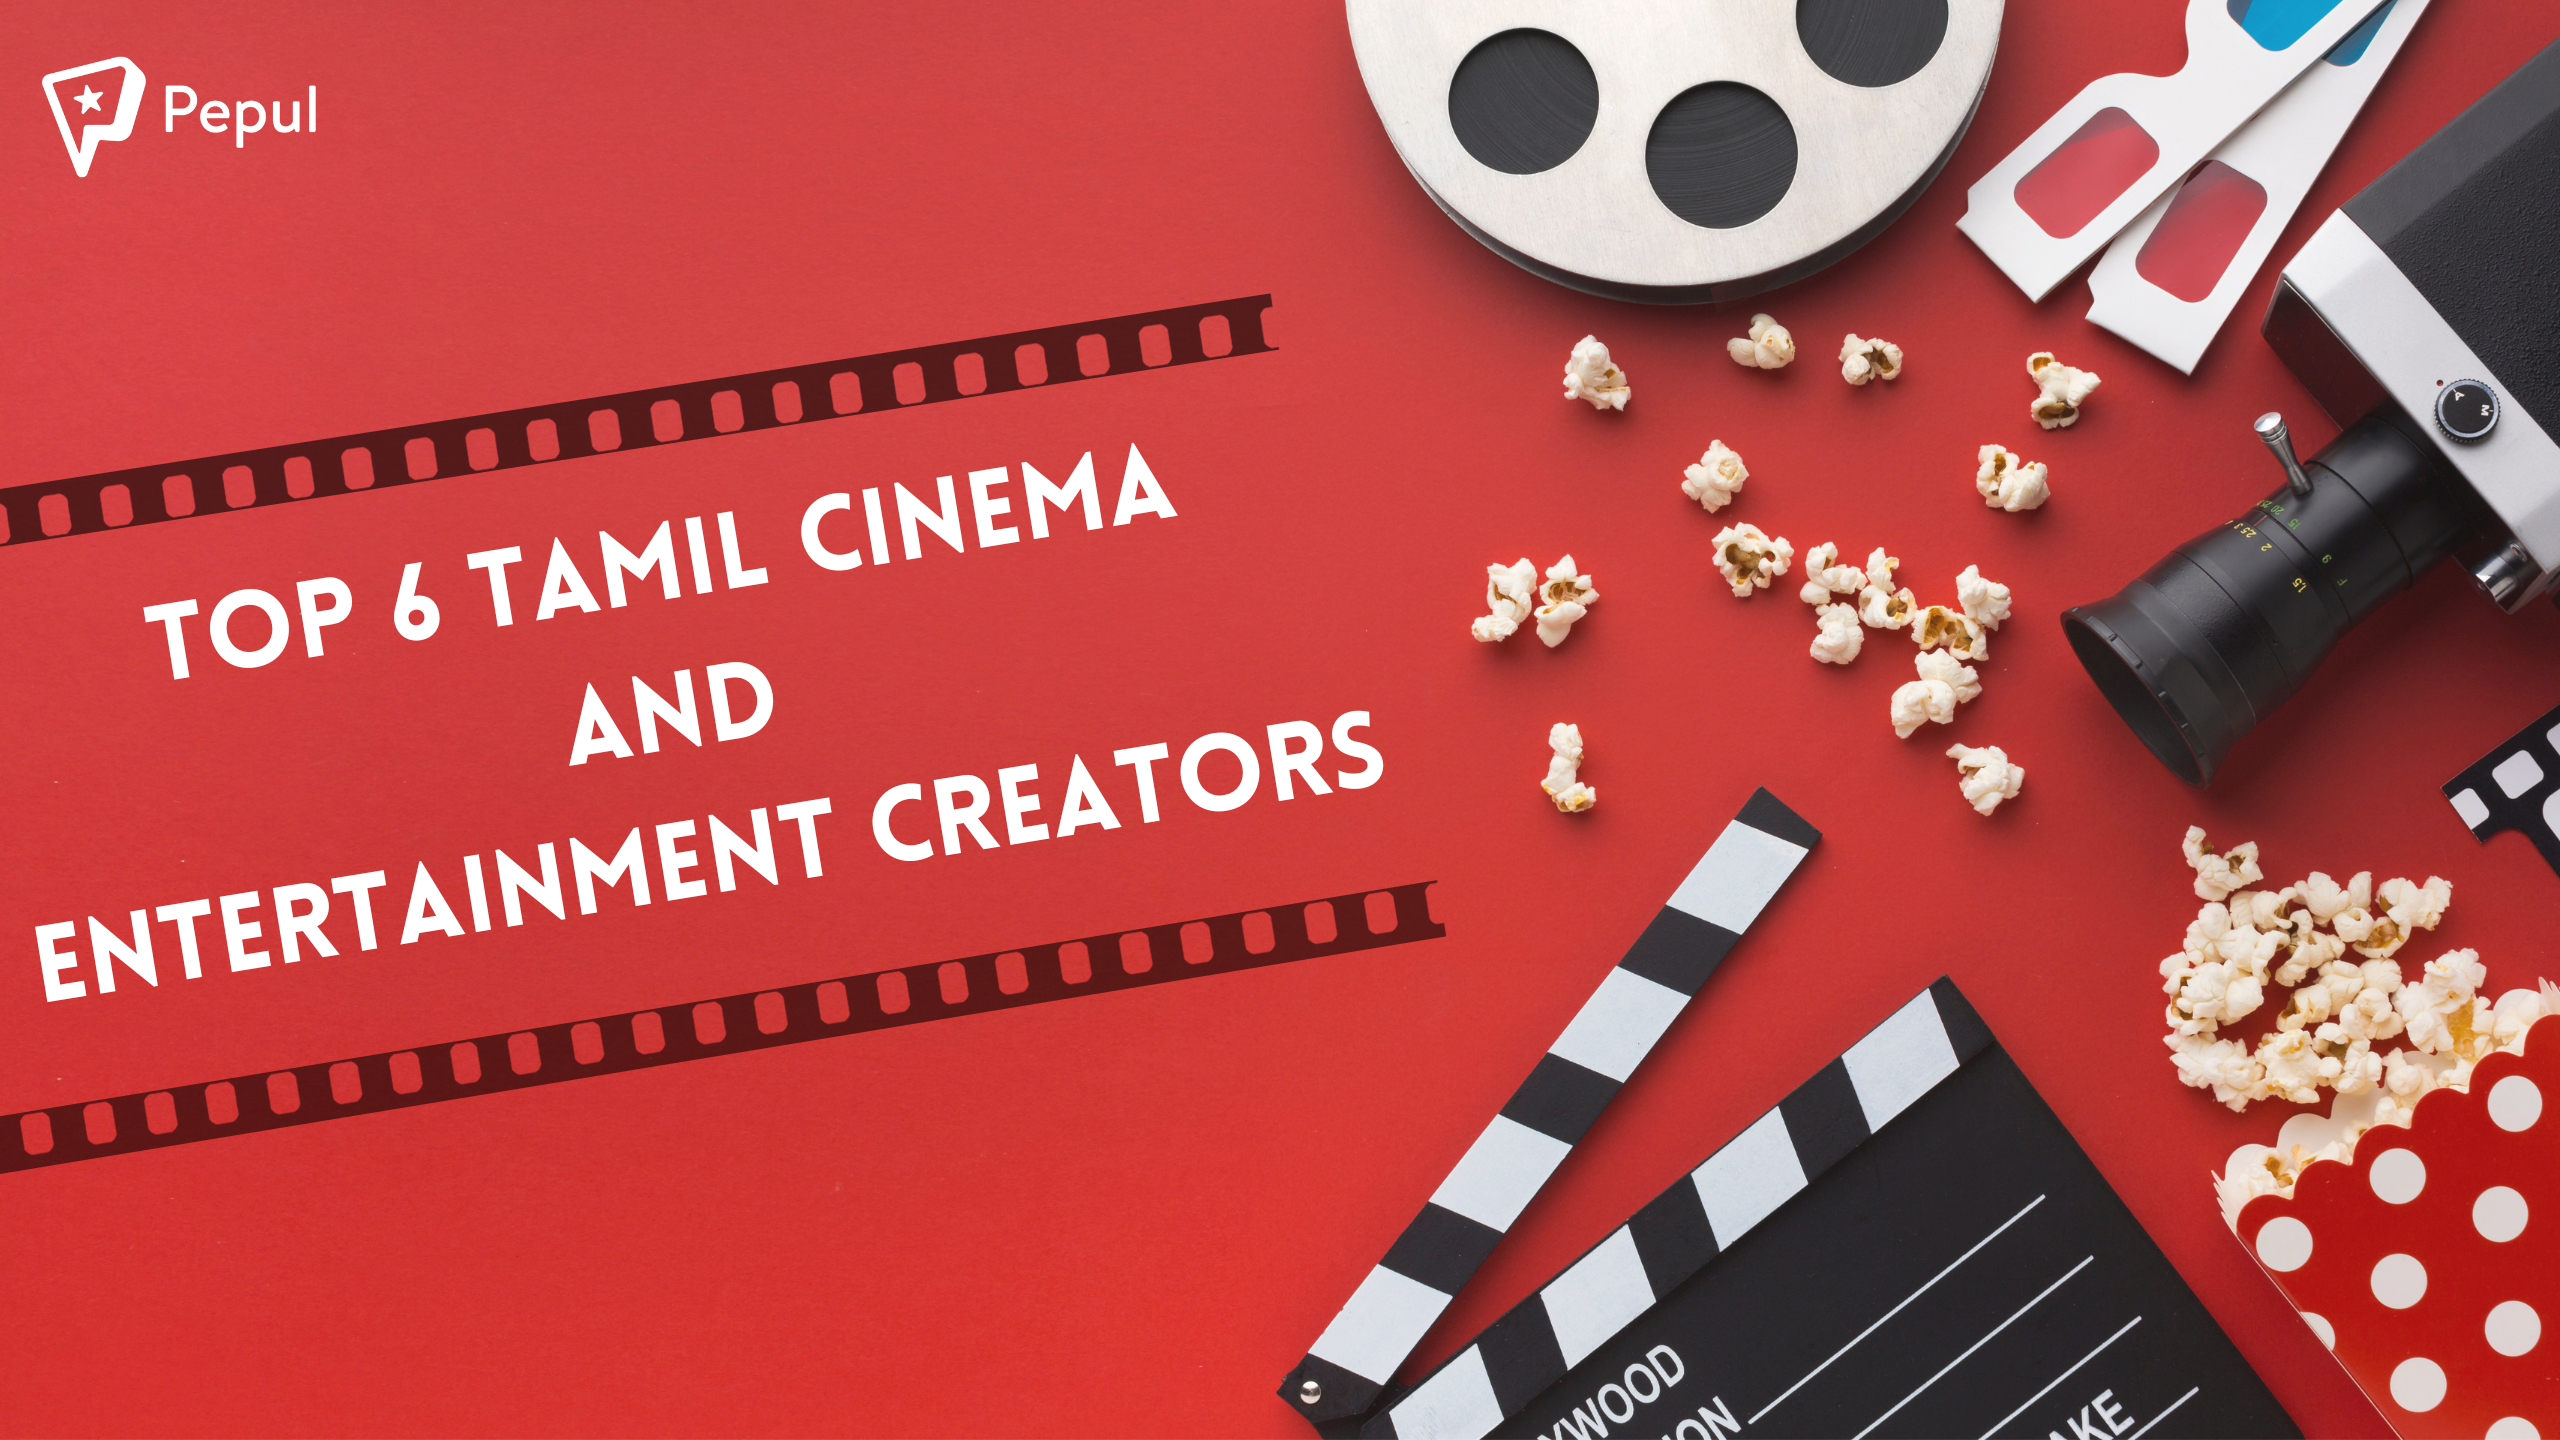 Top 6 List of Best Tamil Cinema and Entertainment Creators